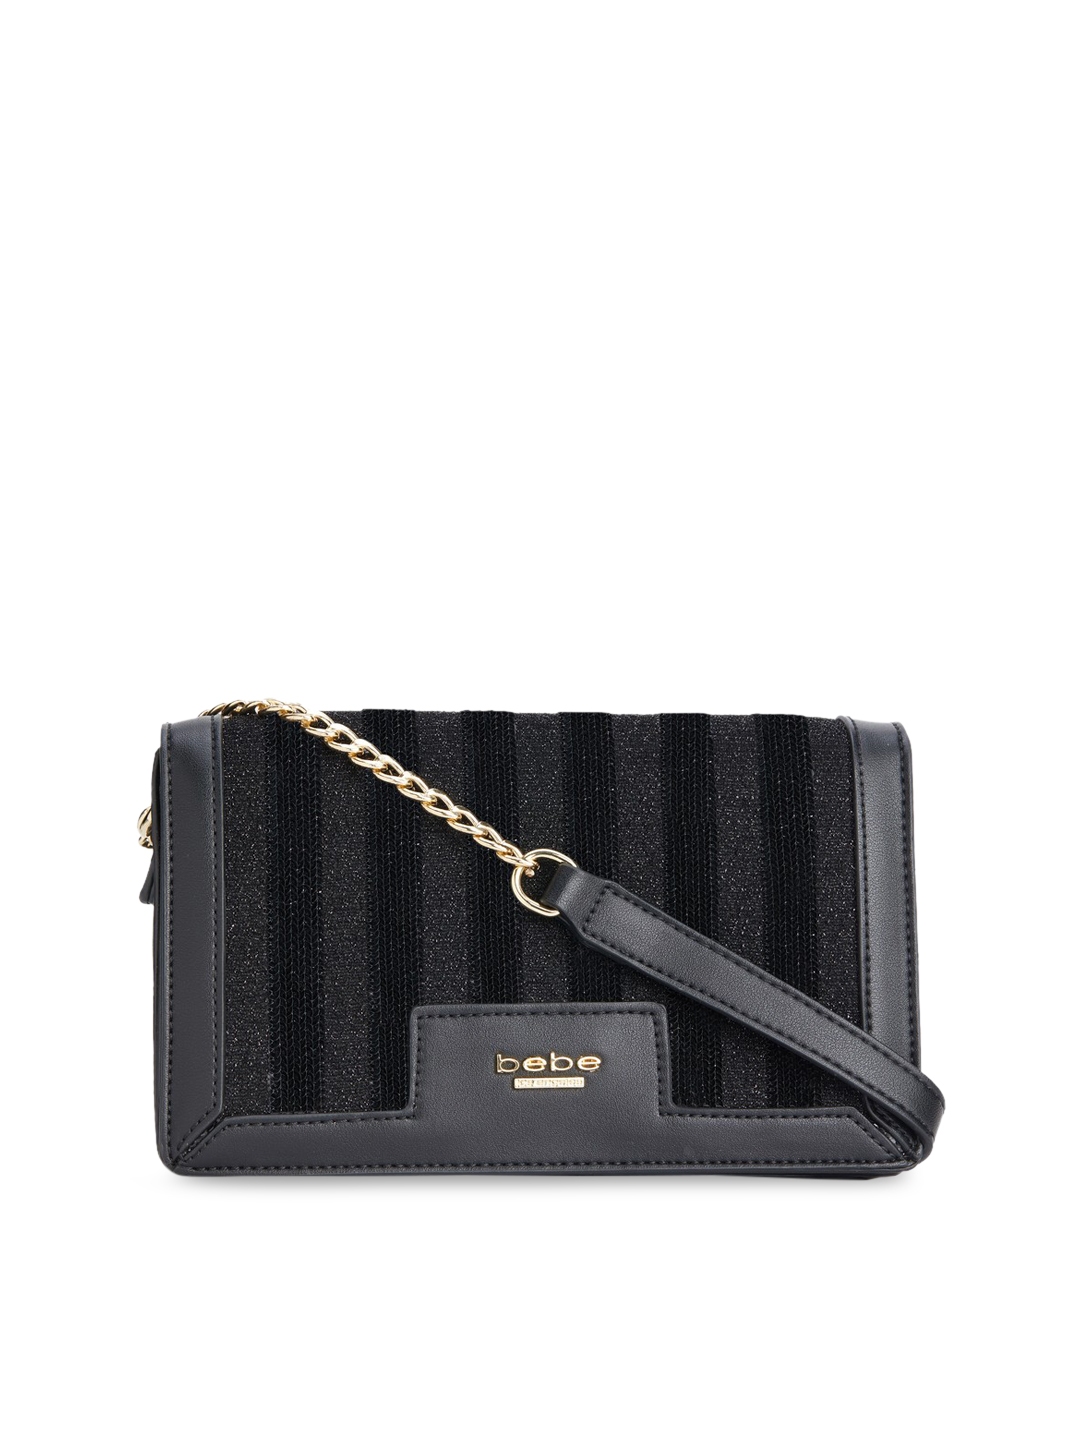 Buy Bebe Black Embellished Sling Bag - Handbags for Women 9442303 | Myntra